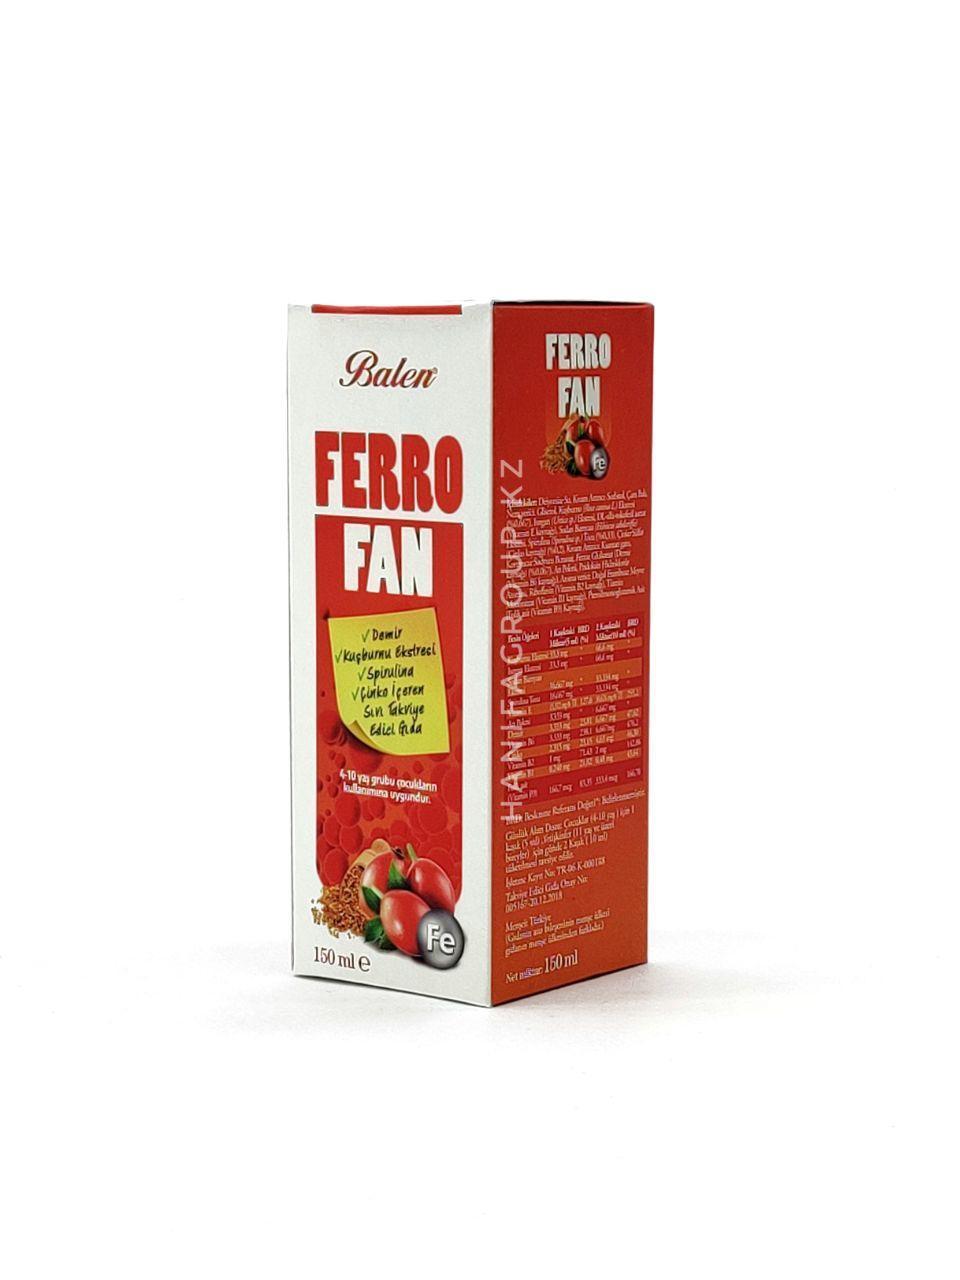 Balen "Ferro Fan" (Пищевая Добавка с Железом и Цинком), 150 мл